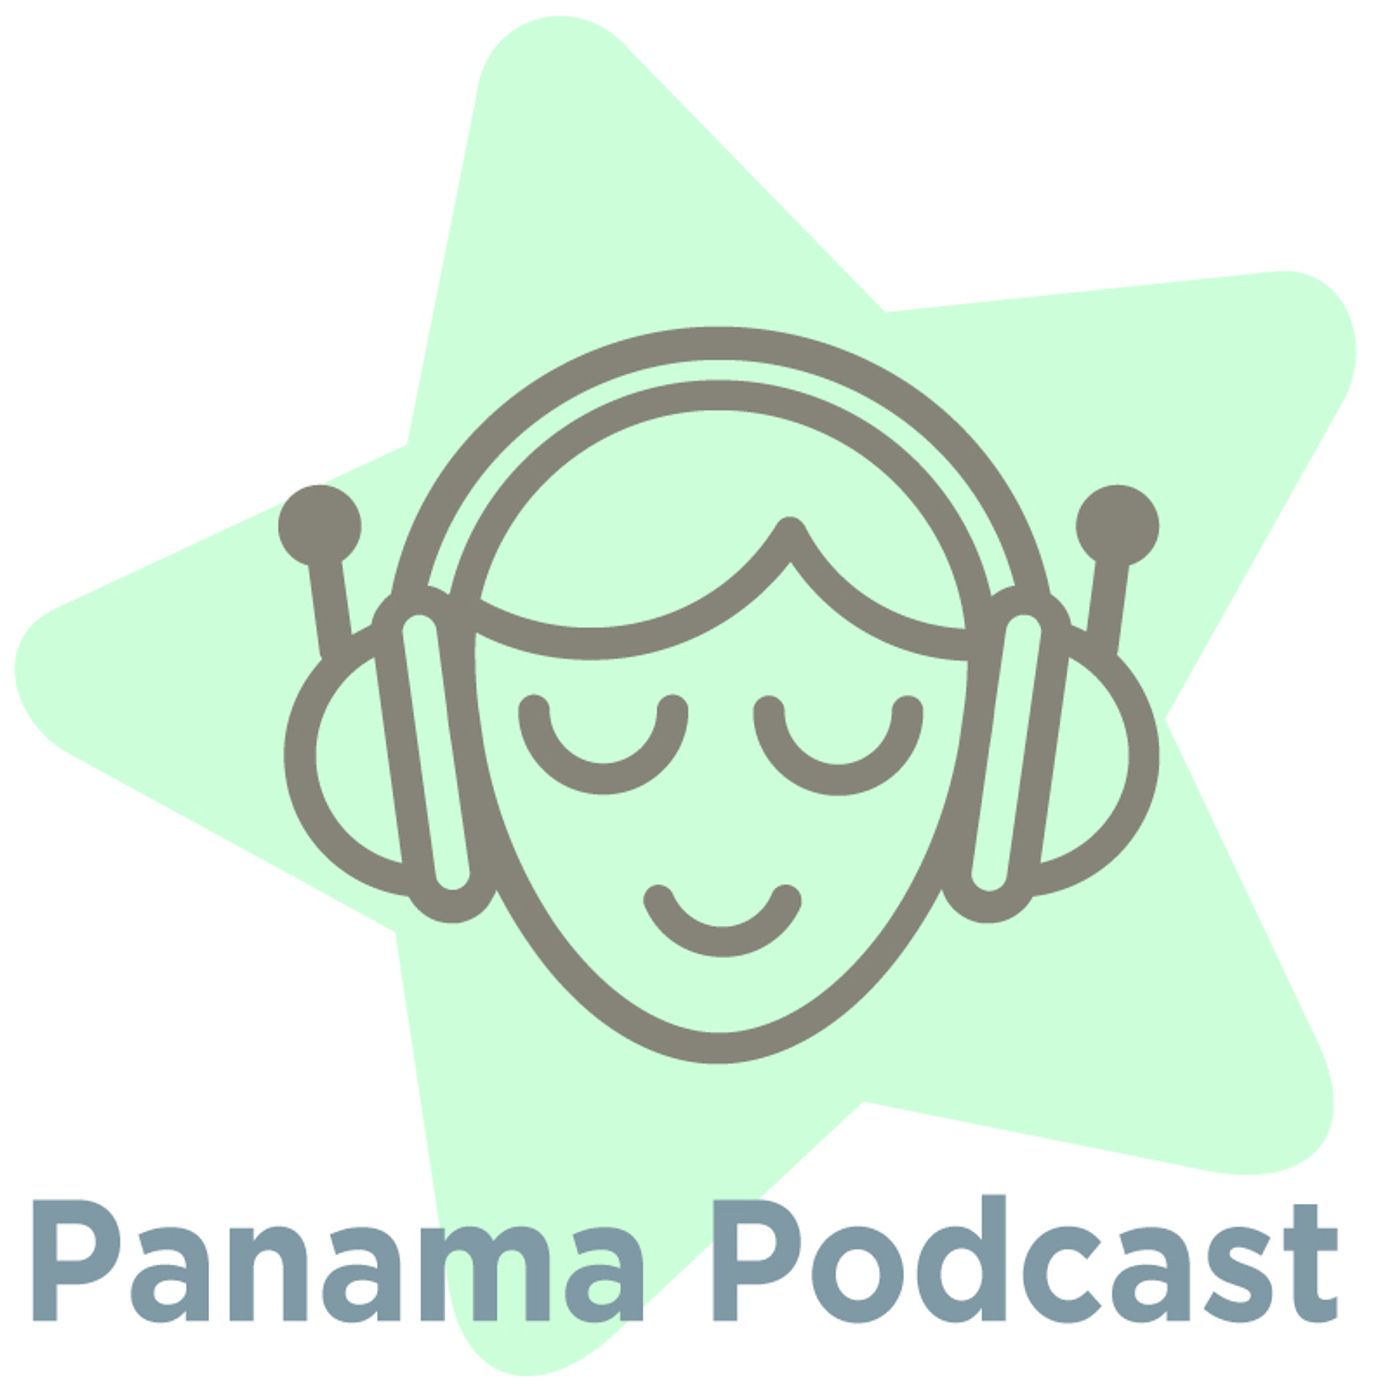 Panama Podcast